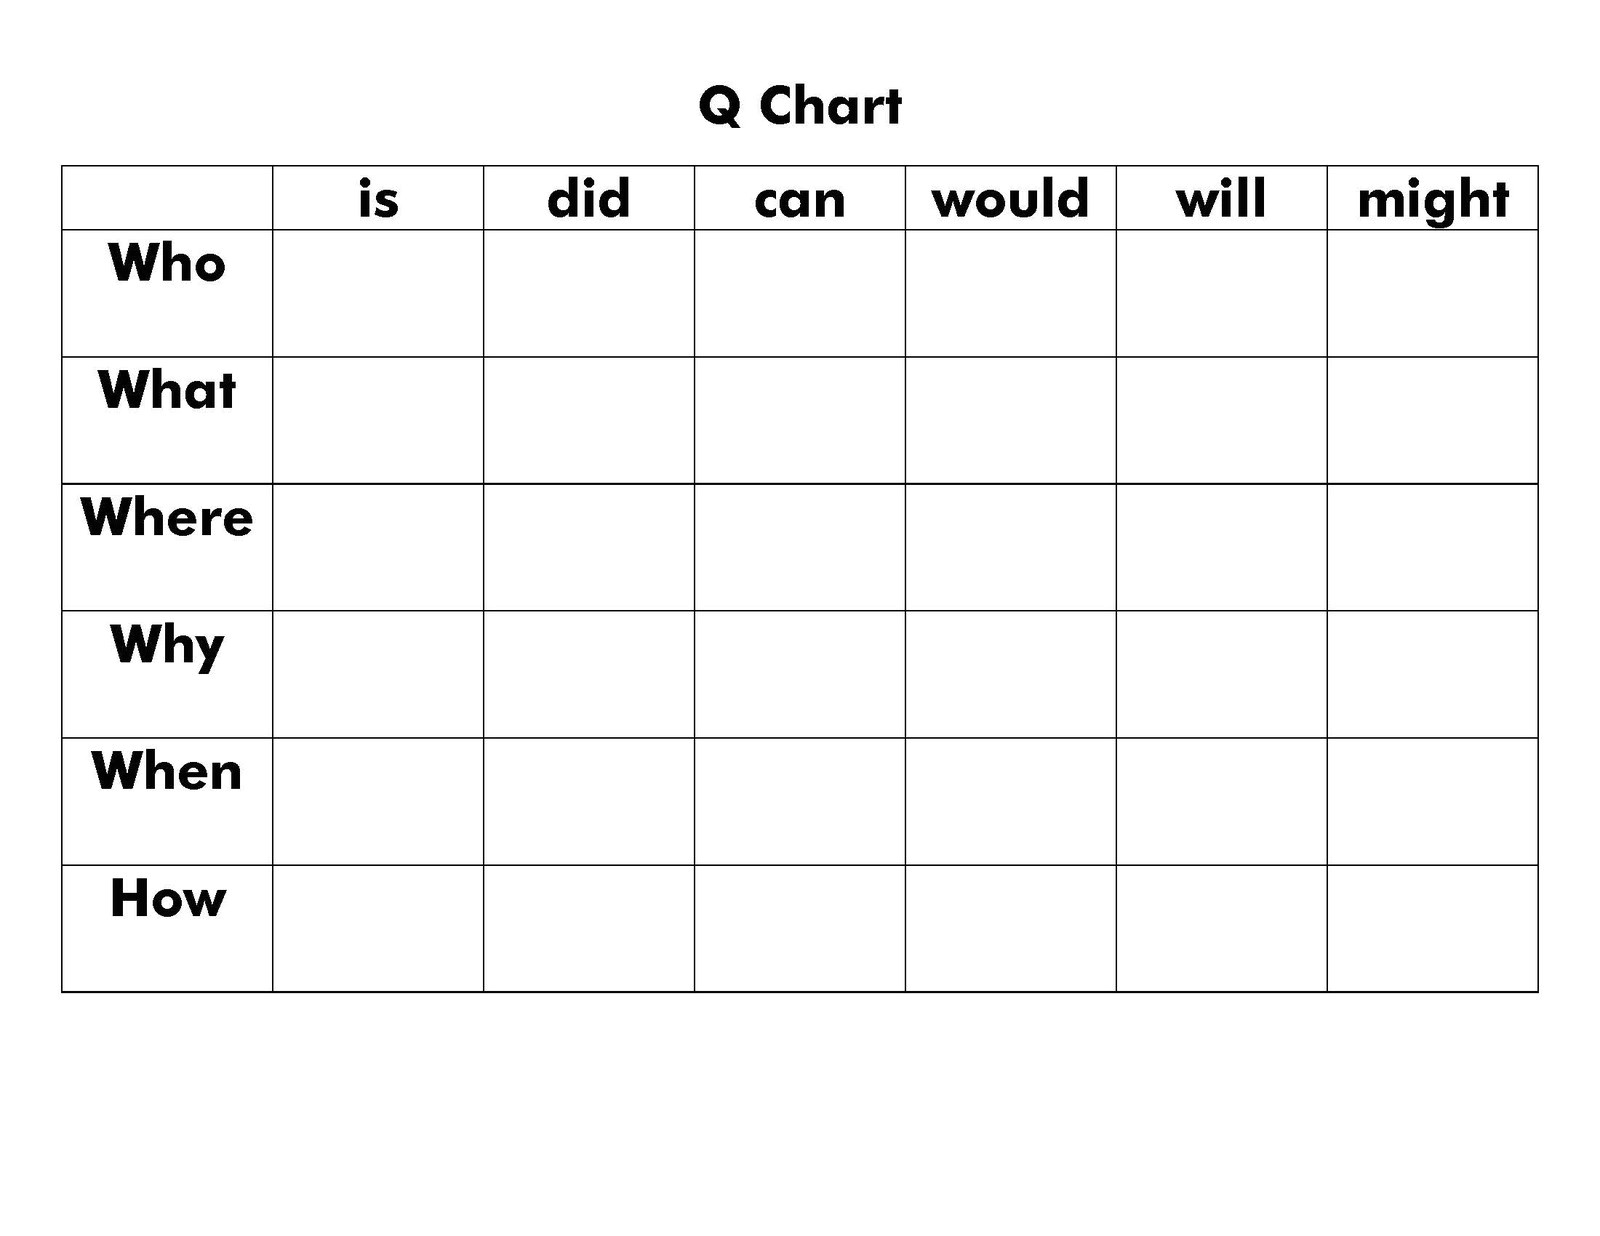 Q Chart Template One and Wonder November 2011